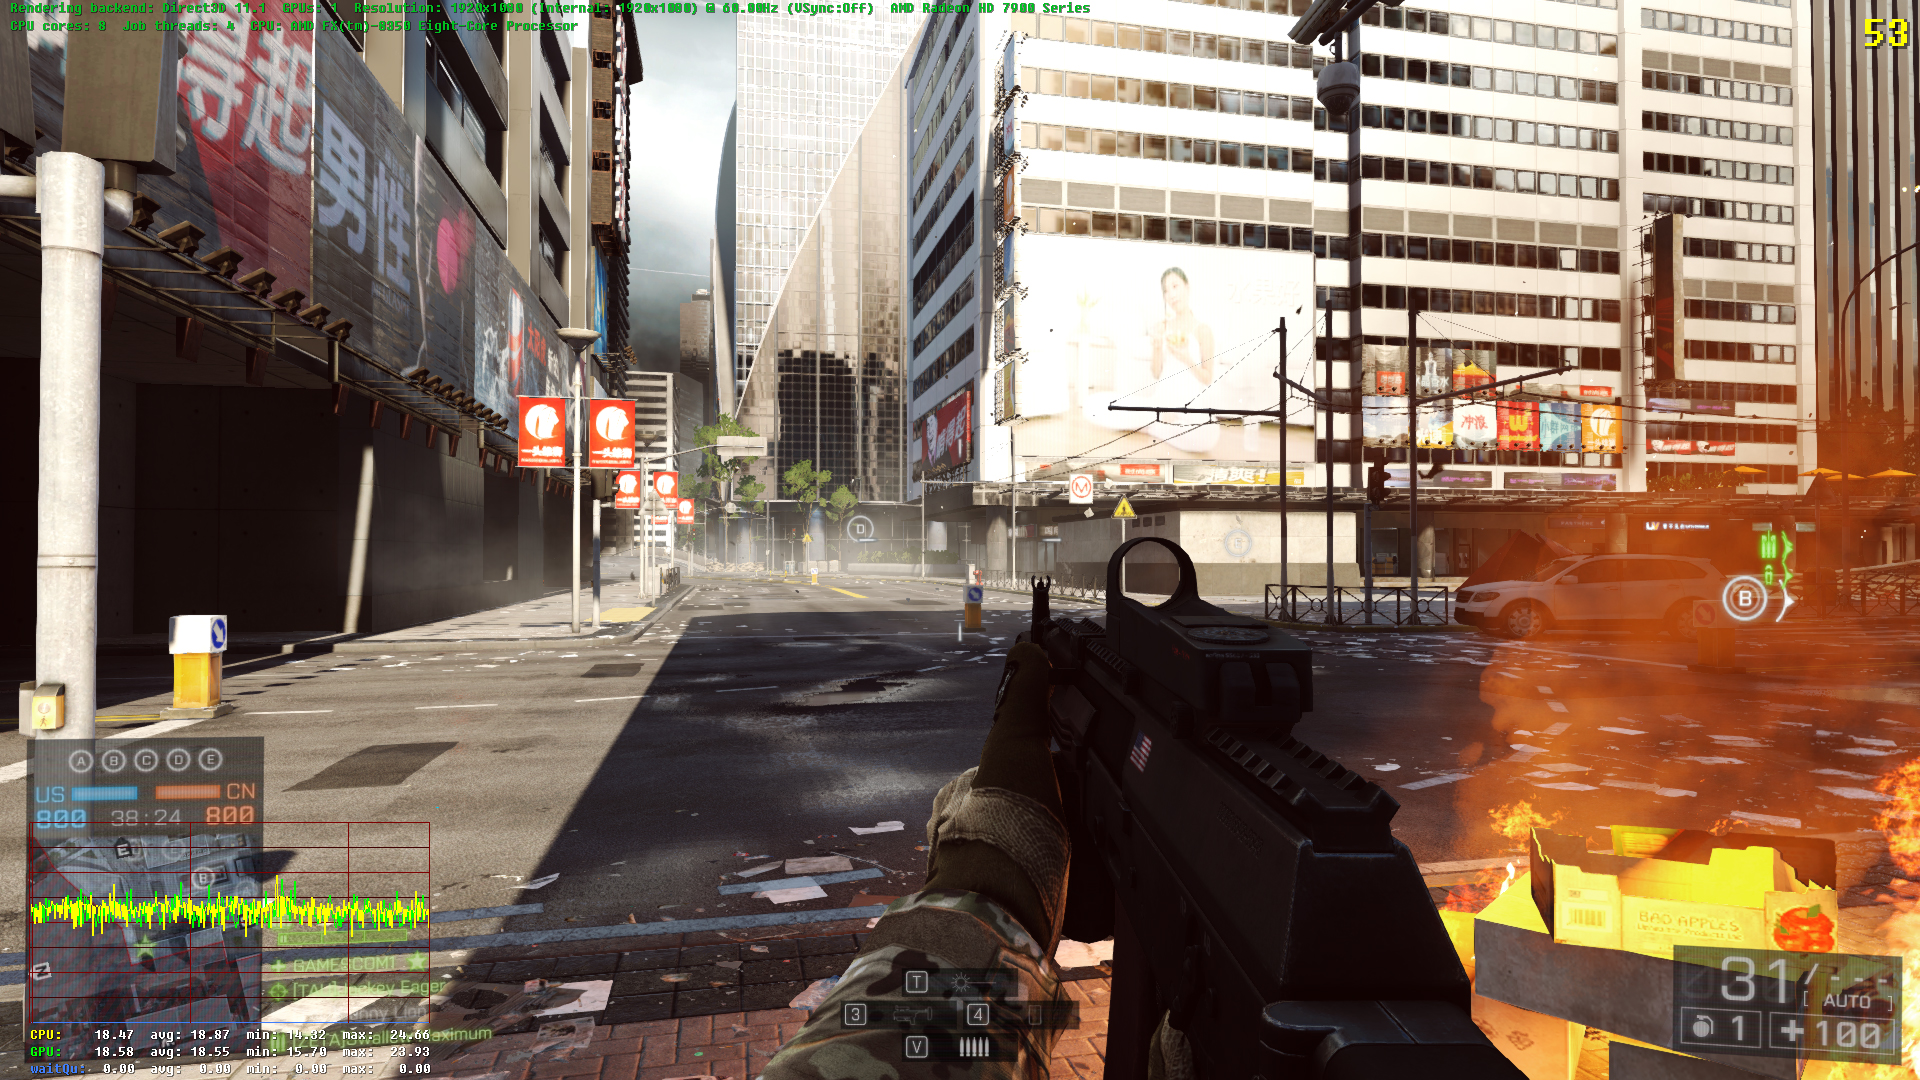 200+] Battlefield 4 Backgrounds